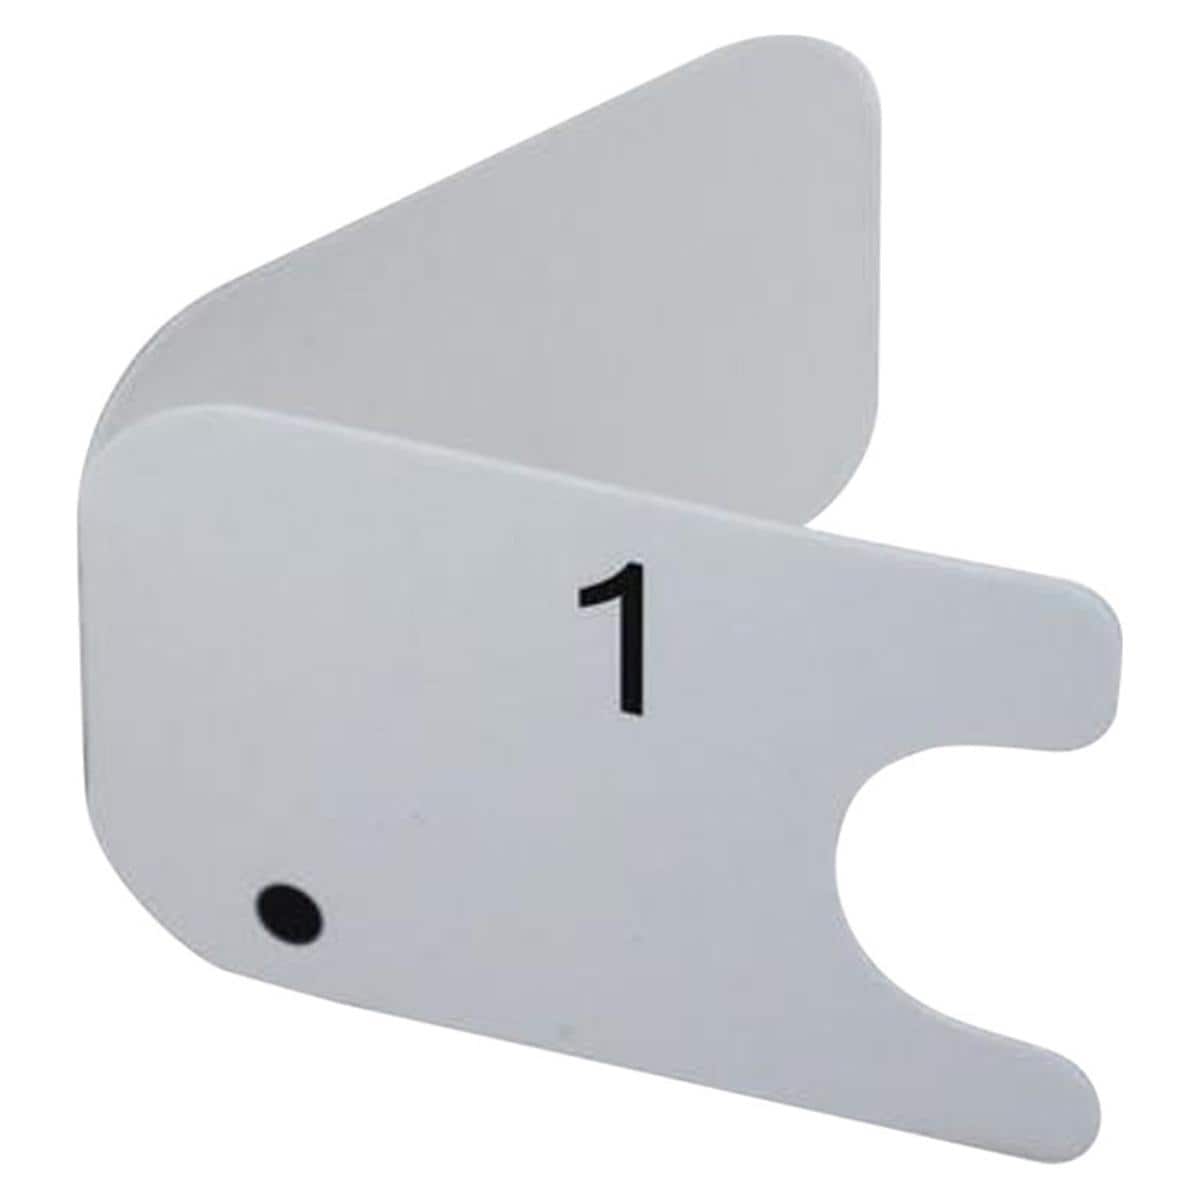 Opticover protection en carton - Taille 1 (2,4 x 4 cm), 200 pcs